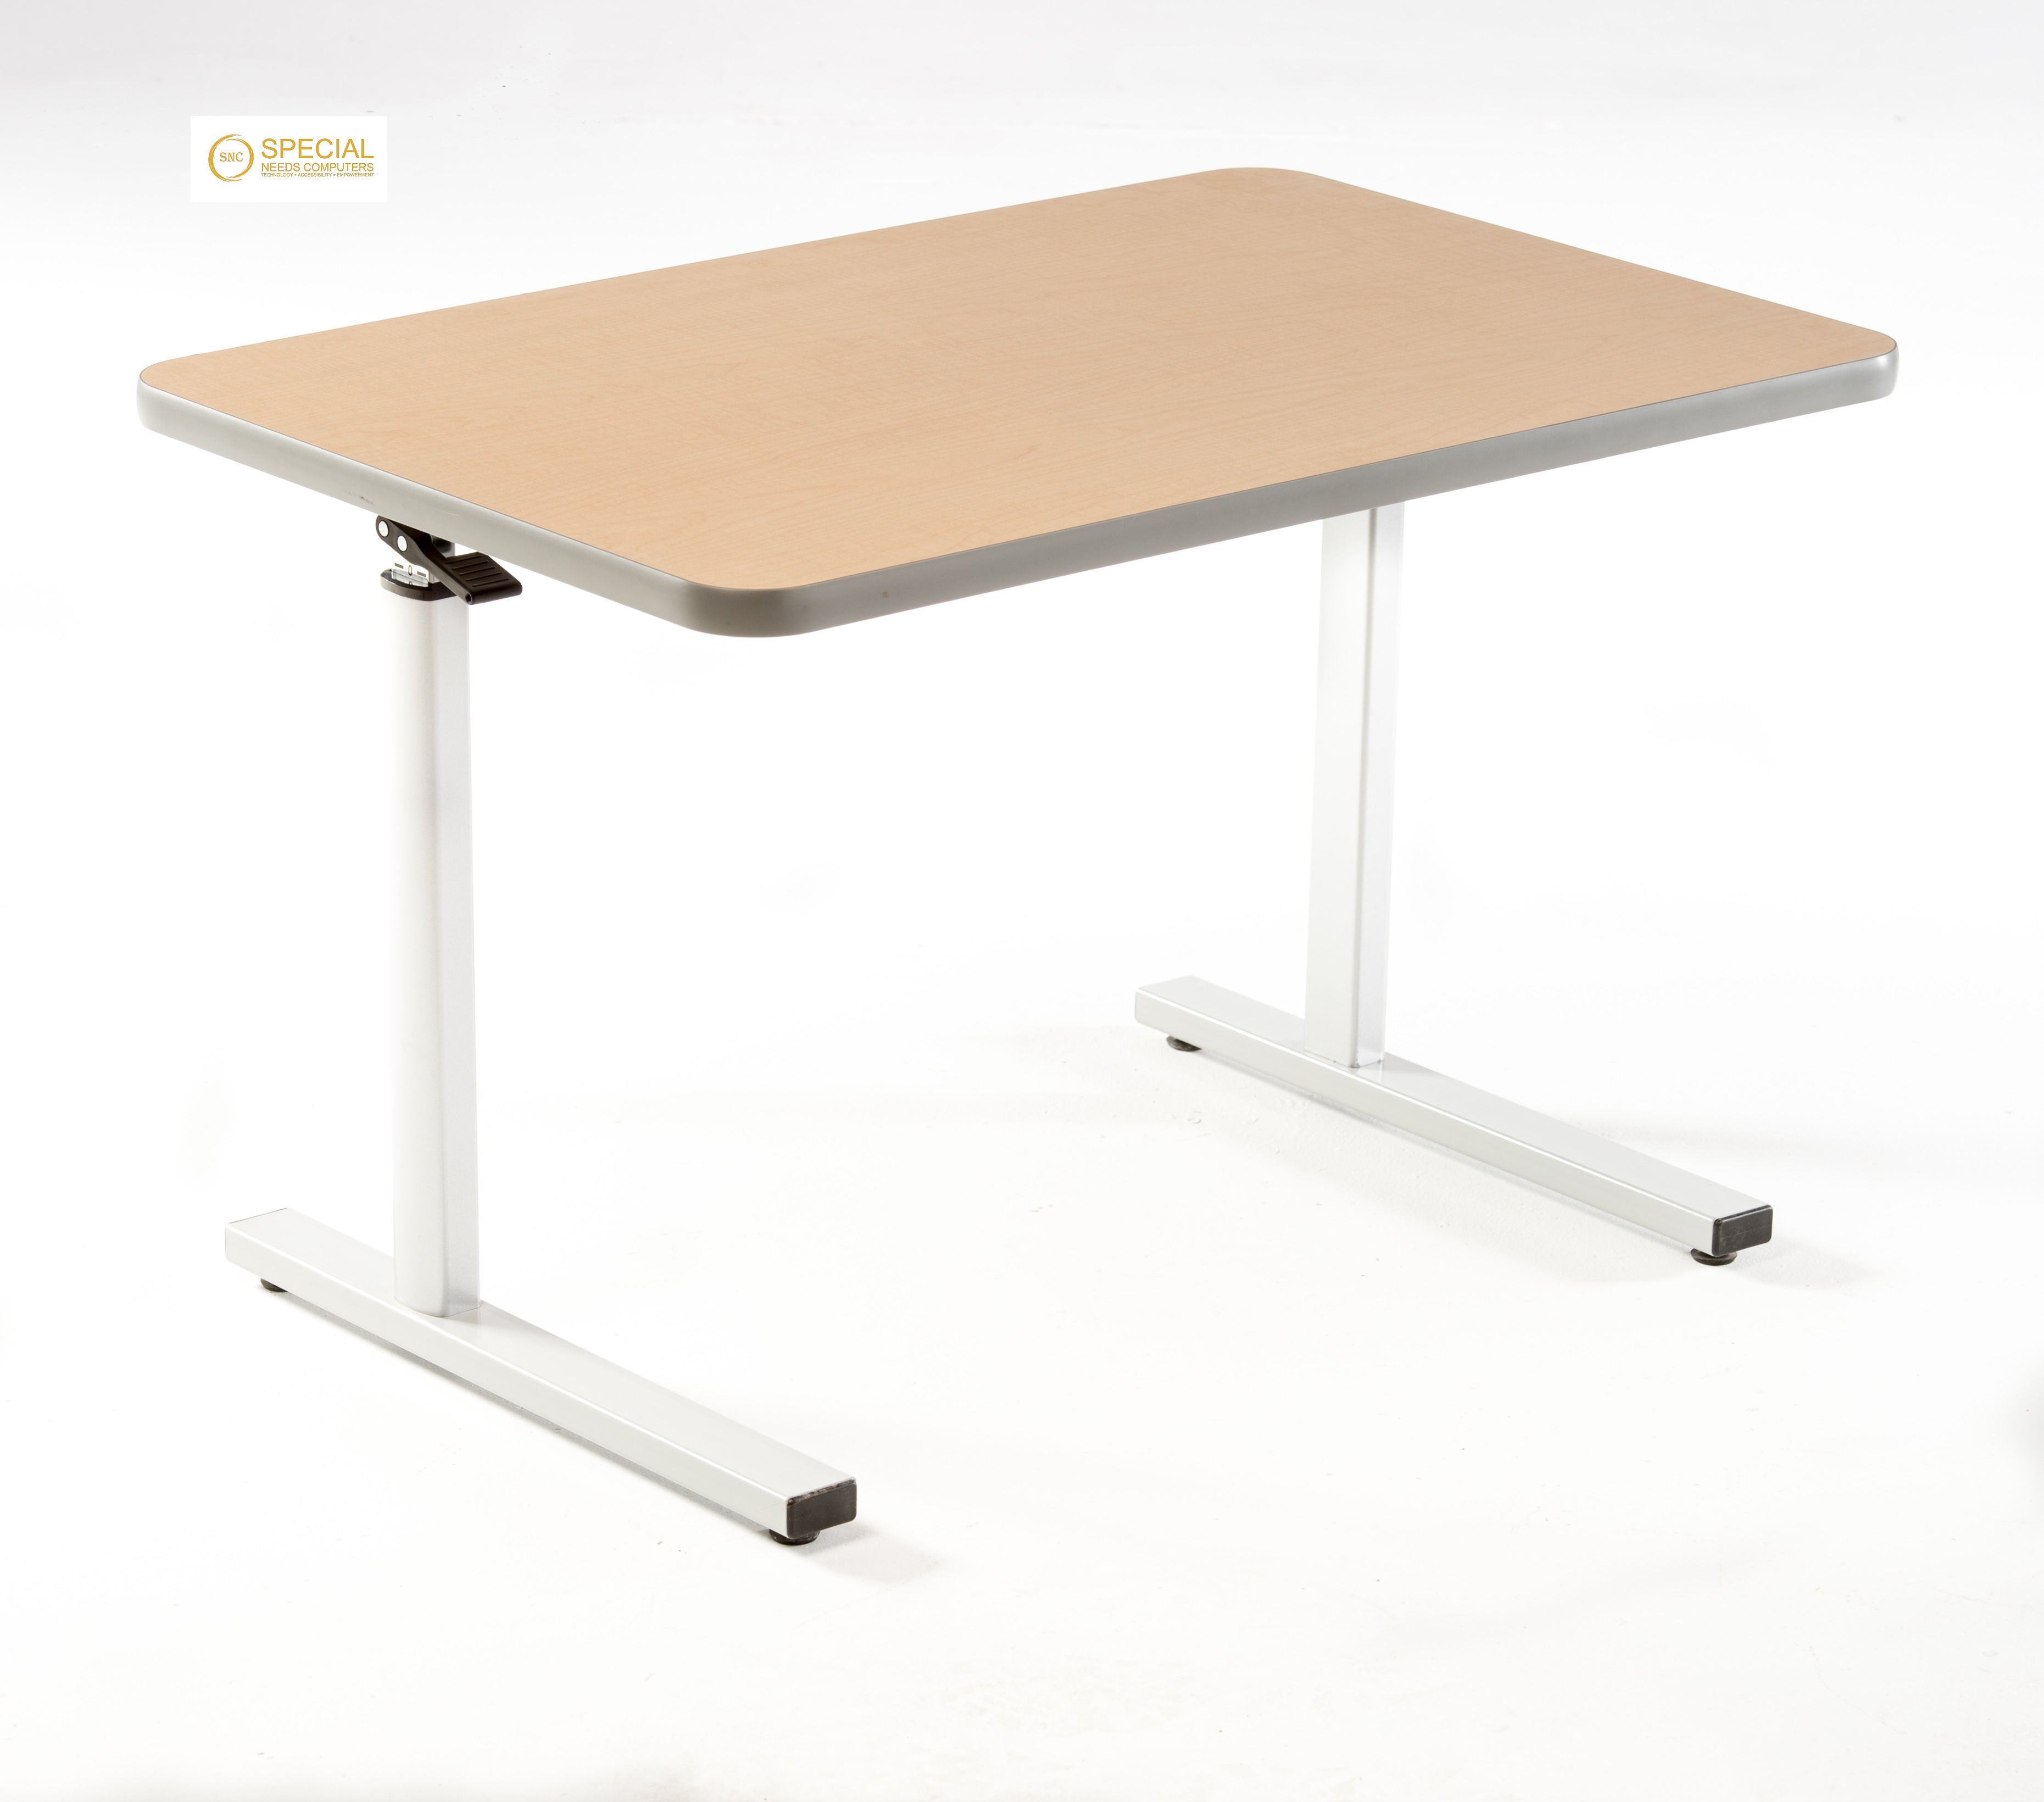 Razor Height Adjustable Wheelchair Desk - 24"x30"